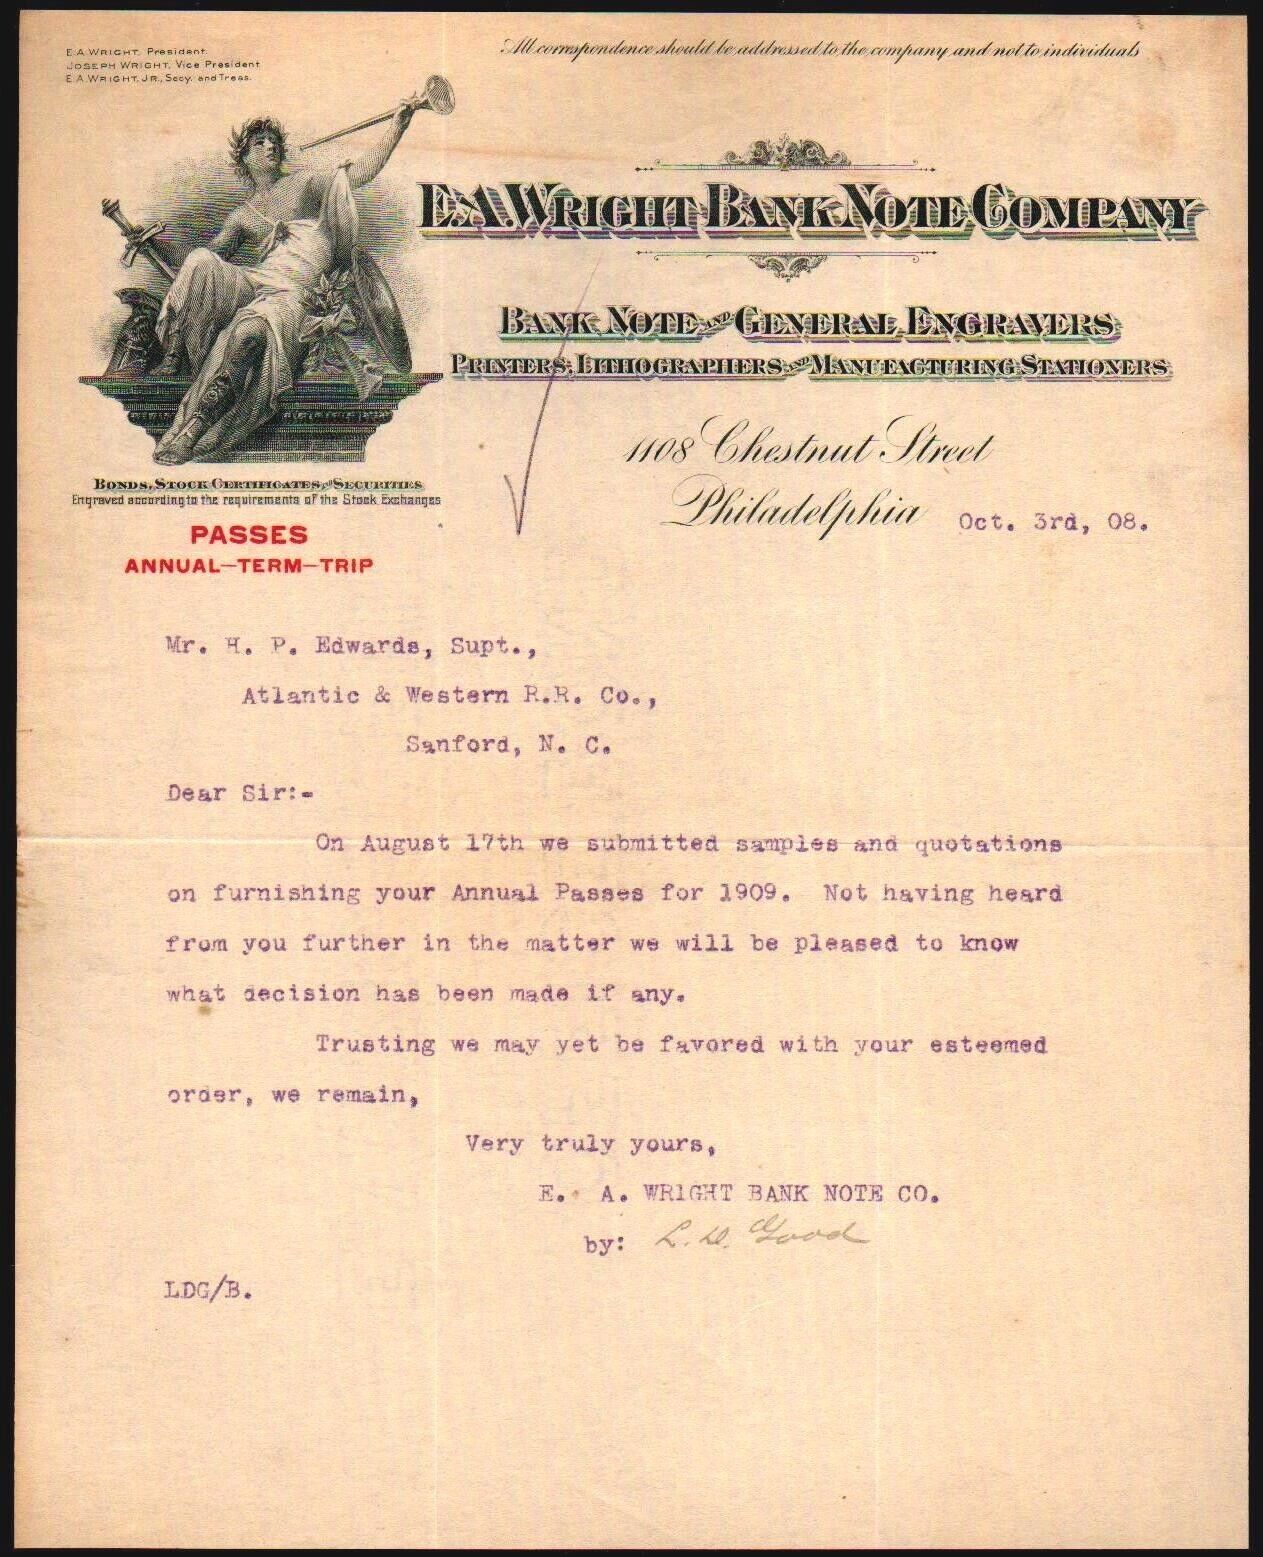 1908 Philadelphia - E A Wright Bank Note Co - Engravers - Printers - Letter Head